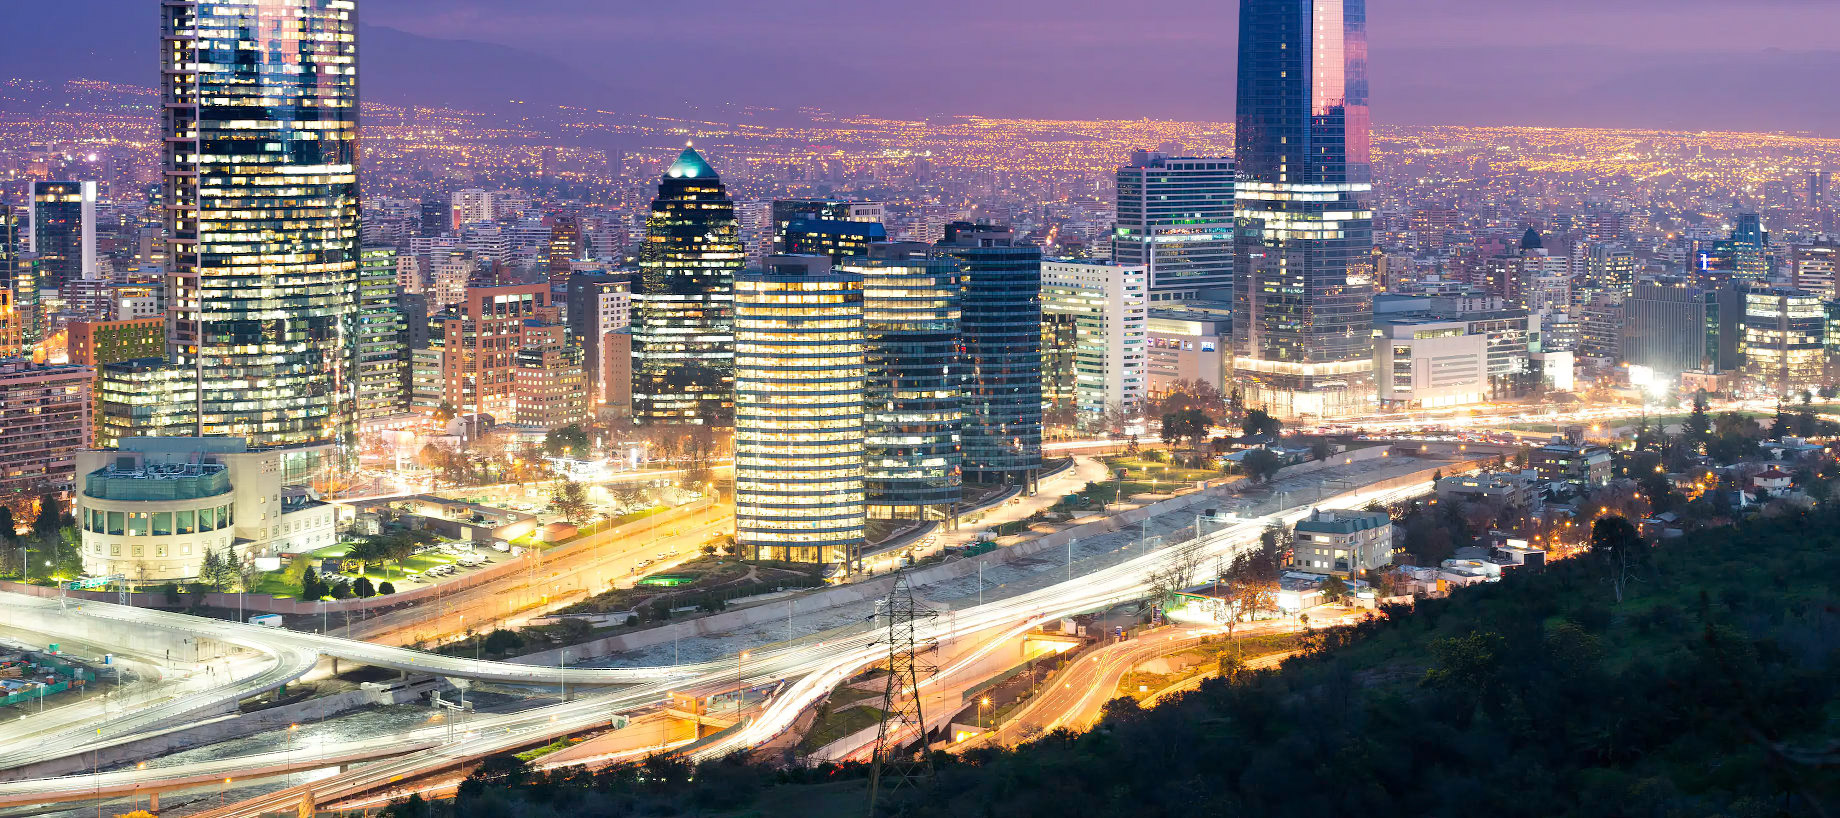 Mandarin Oriental, Santiago Hotel – Santiago, Chile – City Skyline Night View